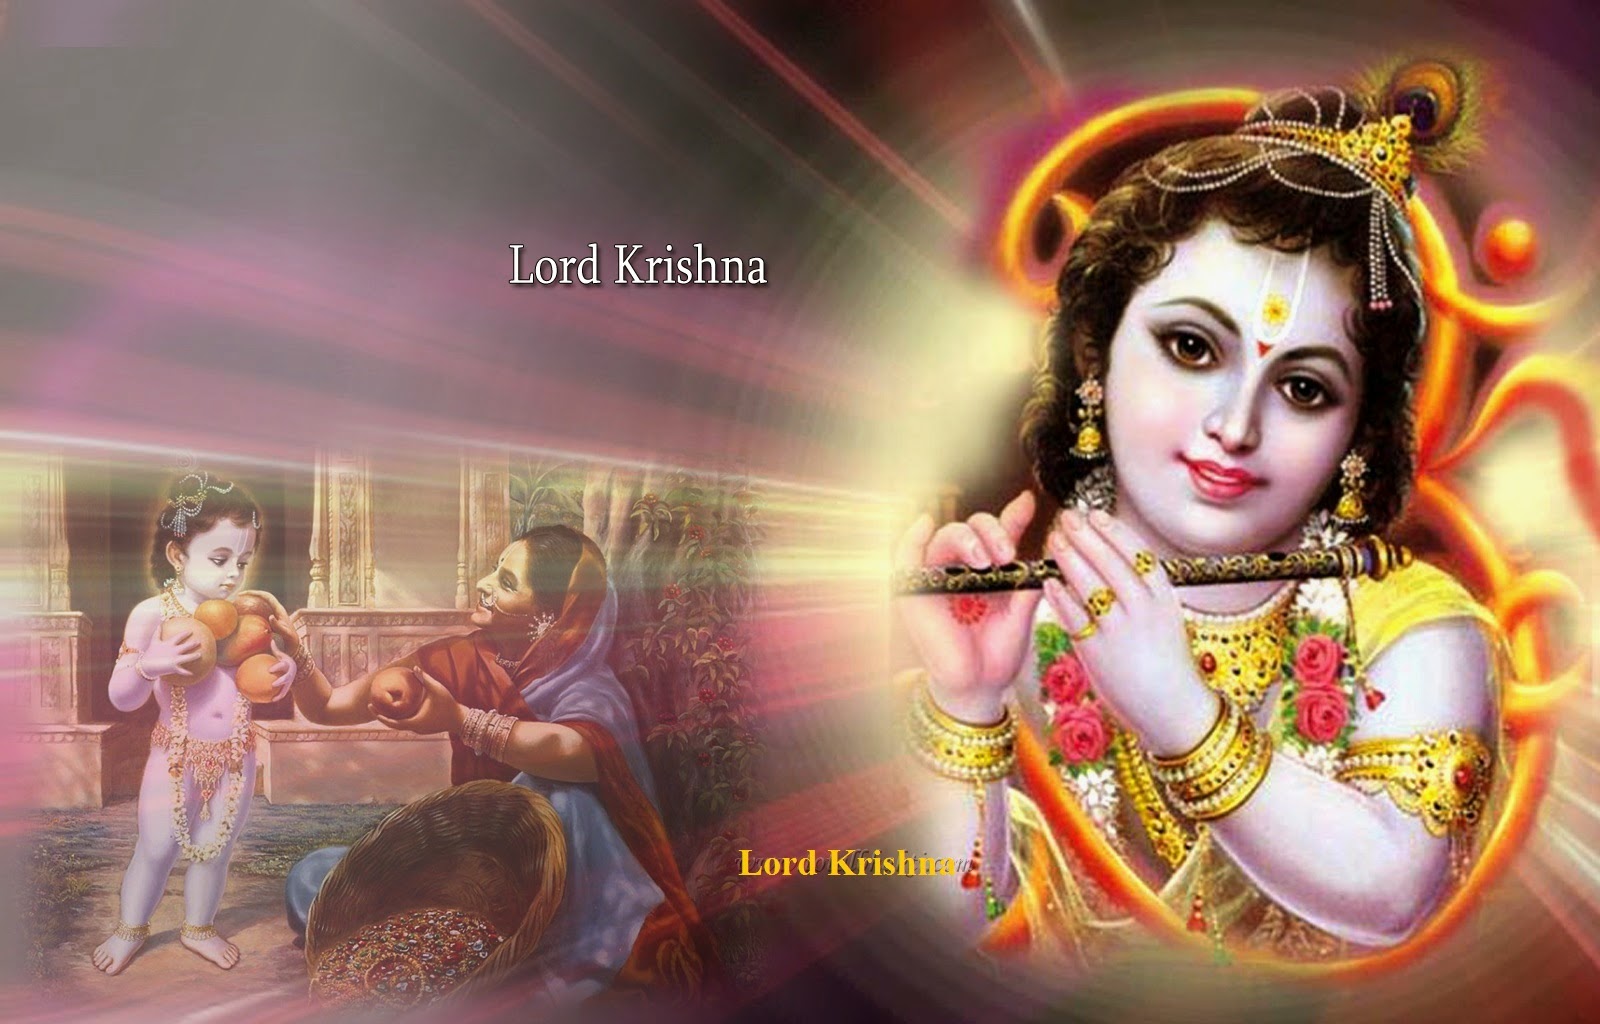 Full Size Lord Krishna Photo for Android Mobile | Festival Chaska